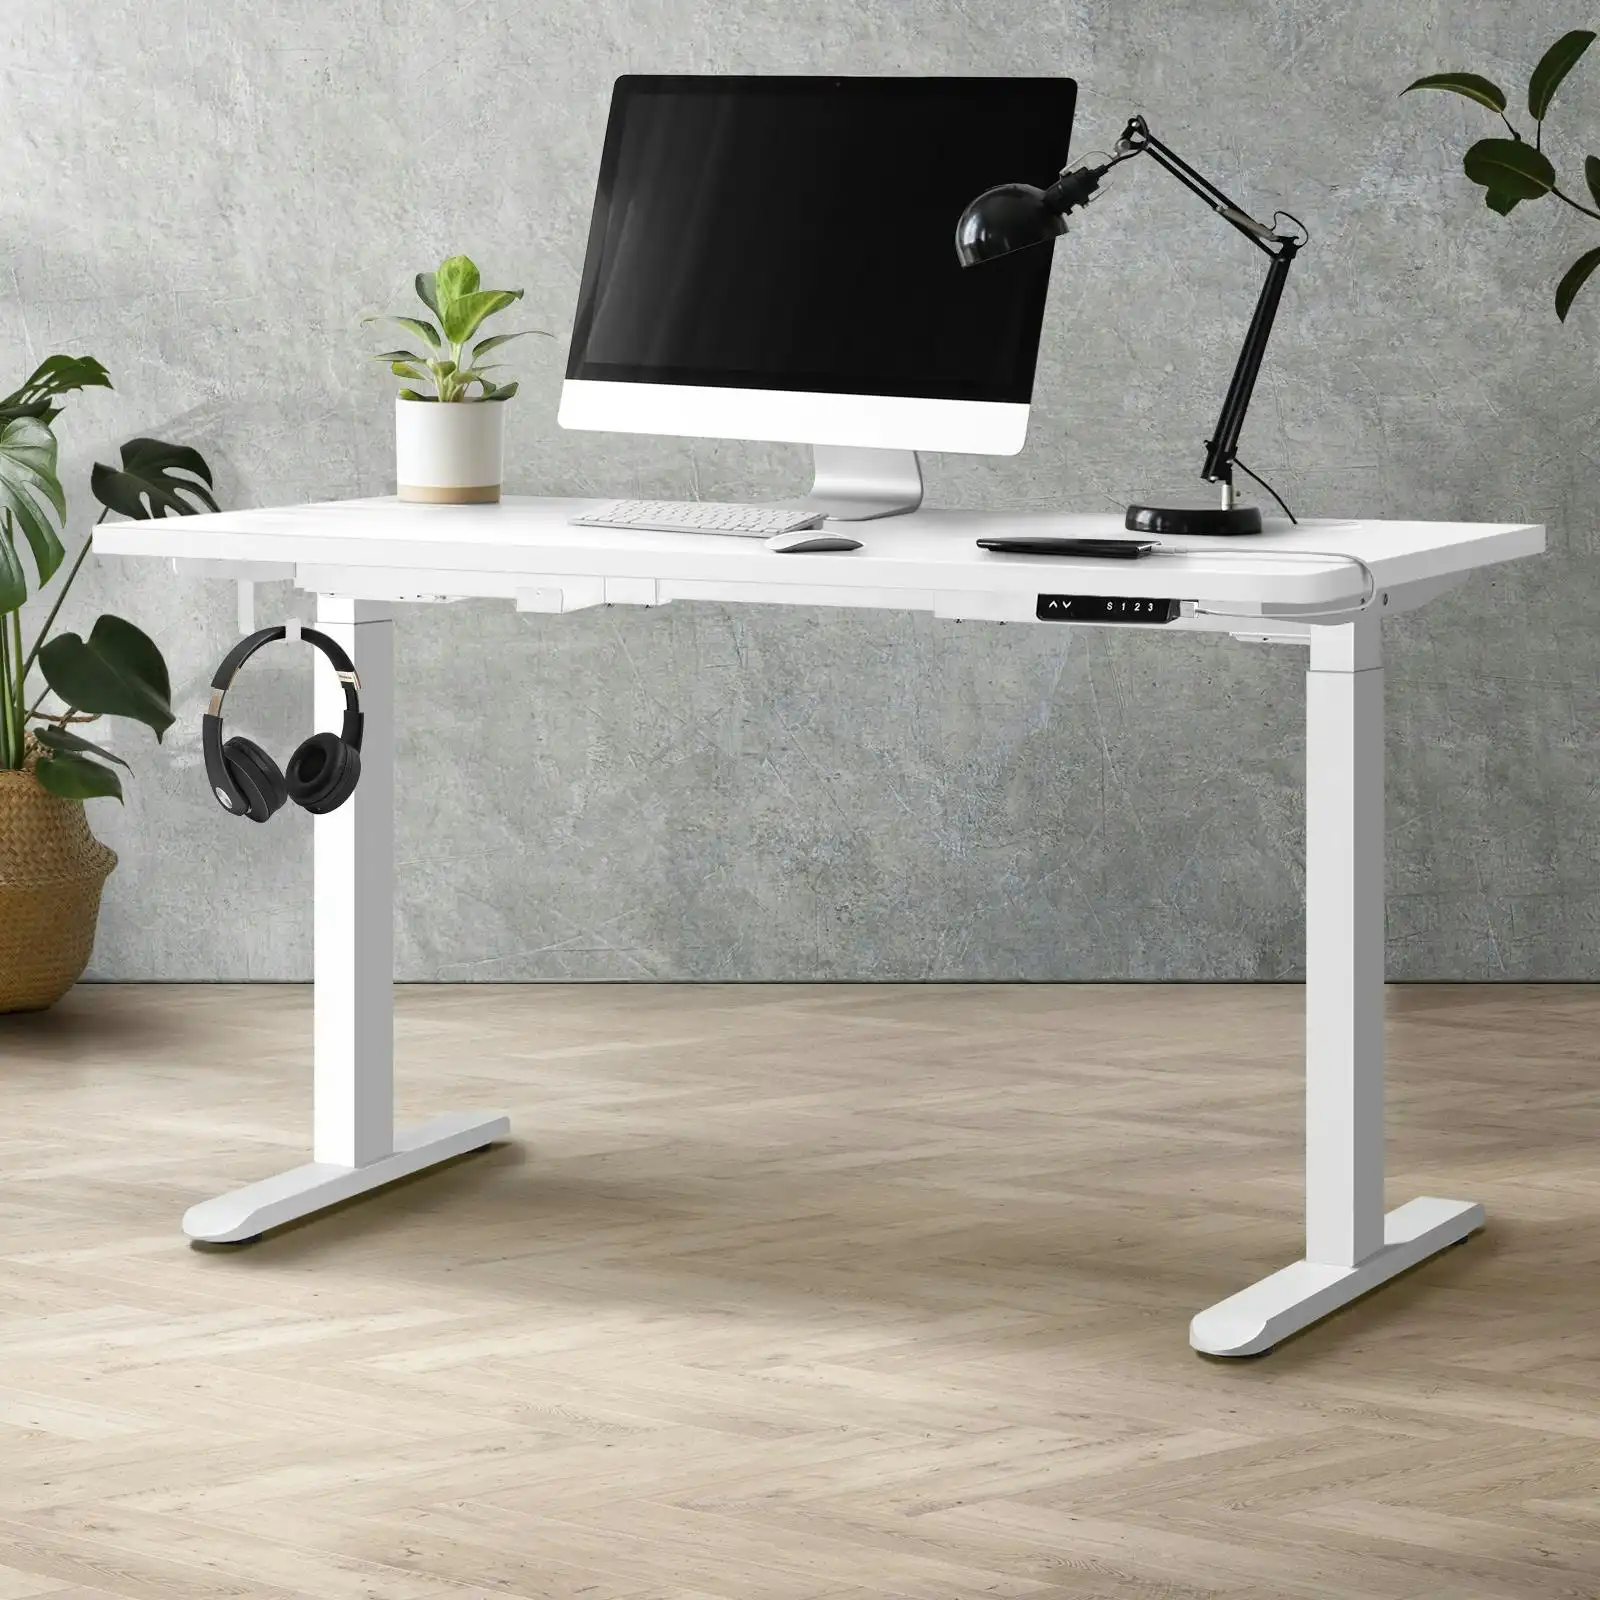 Oikiture 150cm Electric Standing Desk Dual Motor White Frame White Desktop